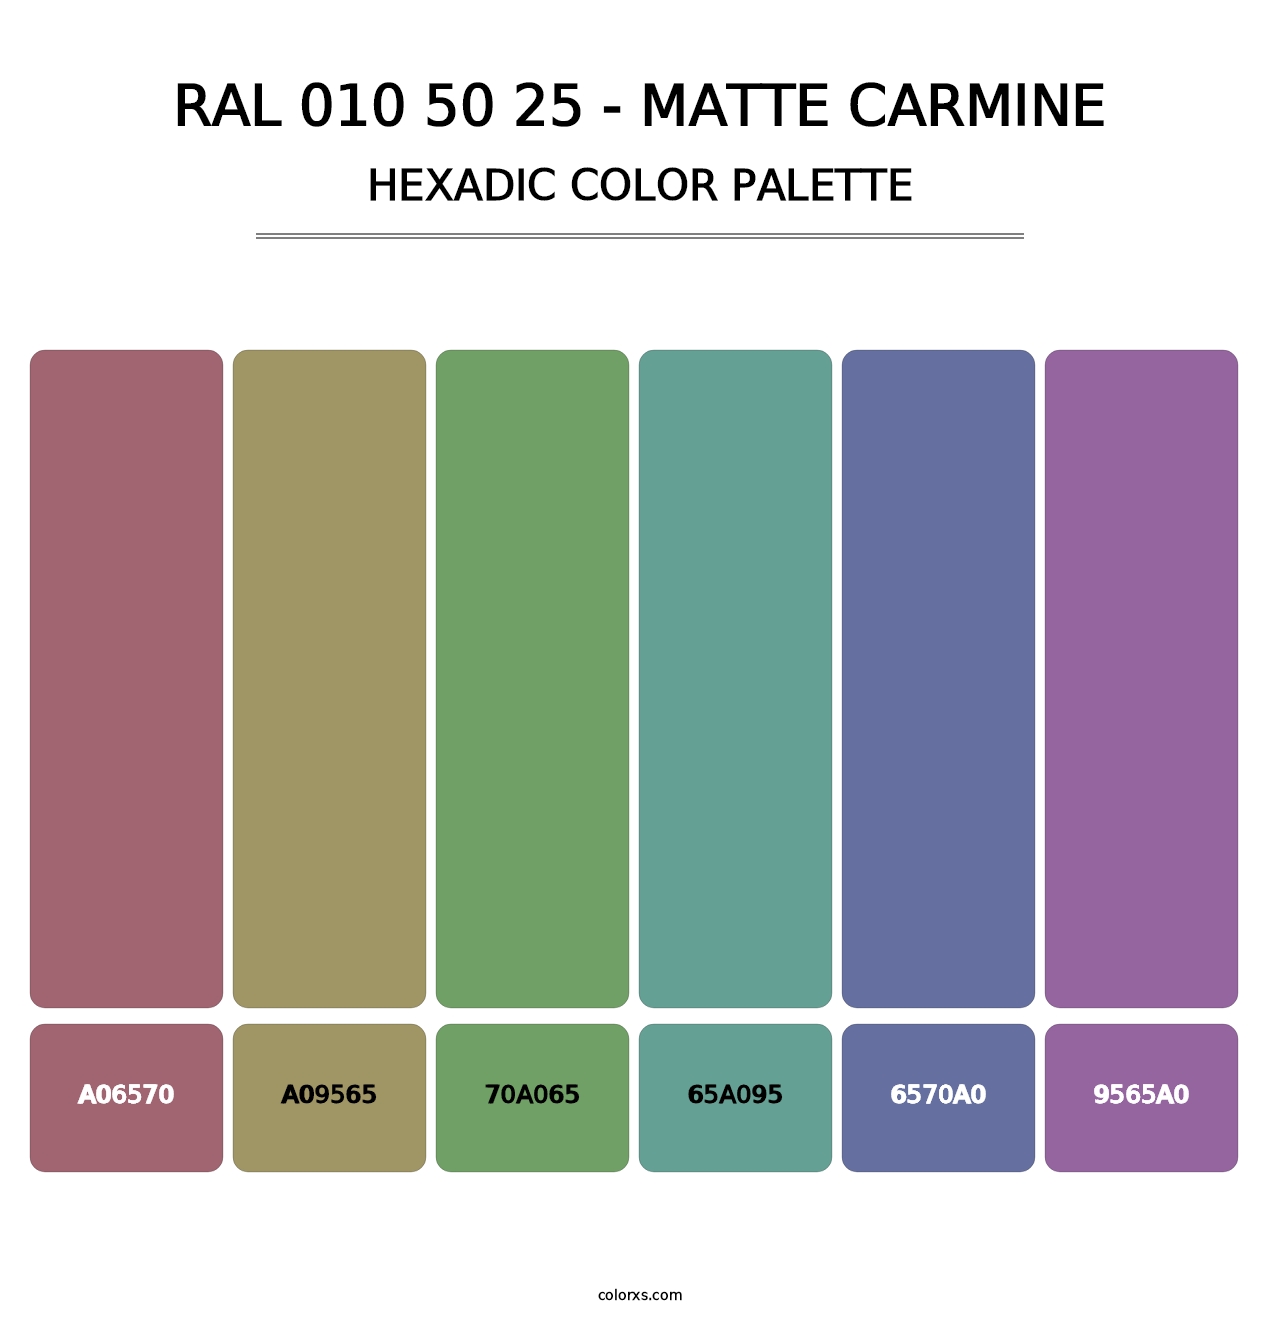 RAL 010 50 25 - Matte Carmine - Hexadic Color Palette